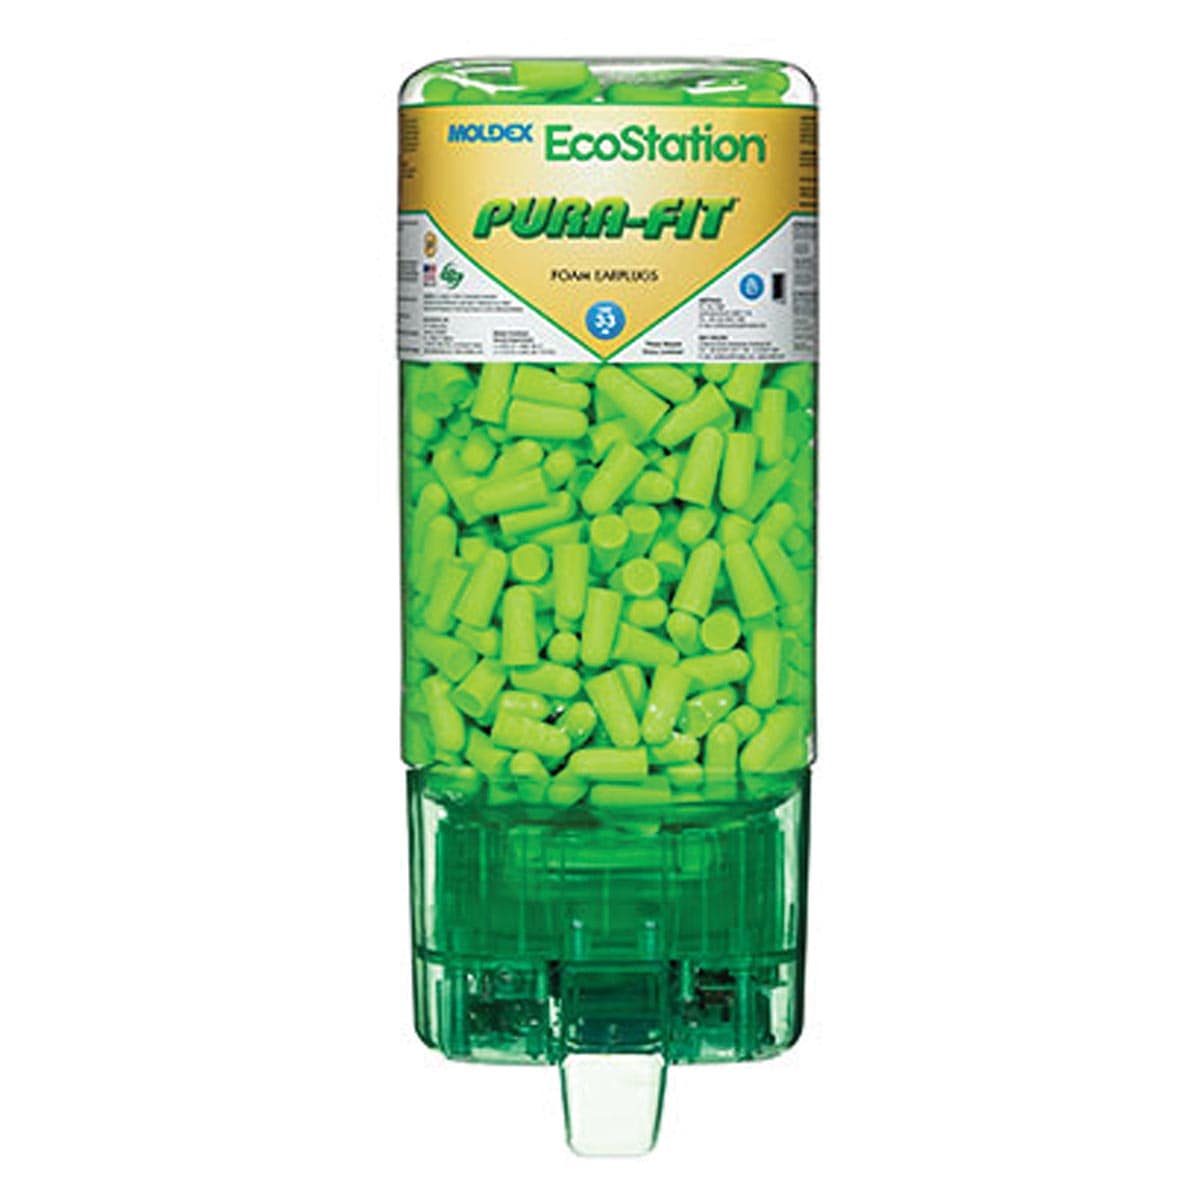 Moldex TouchFree EcoStation® Earplug Dispenser Starter Kit with Pura-Fit® Earplugs, 500 pairs